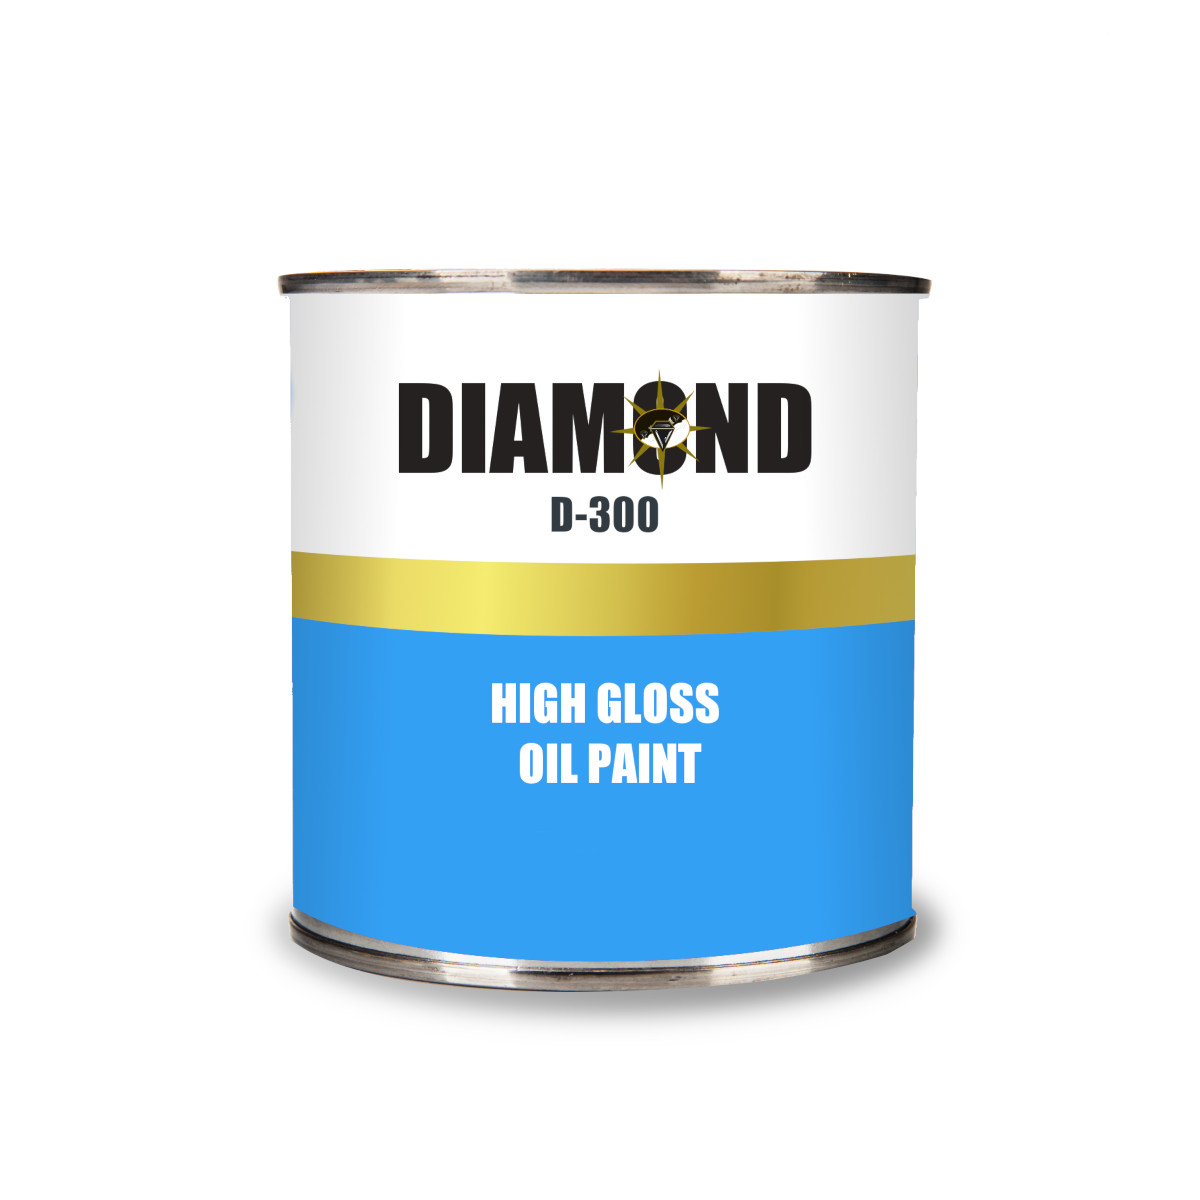 Diamond D300 Oil Paint